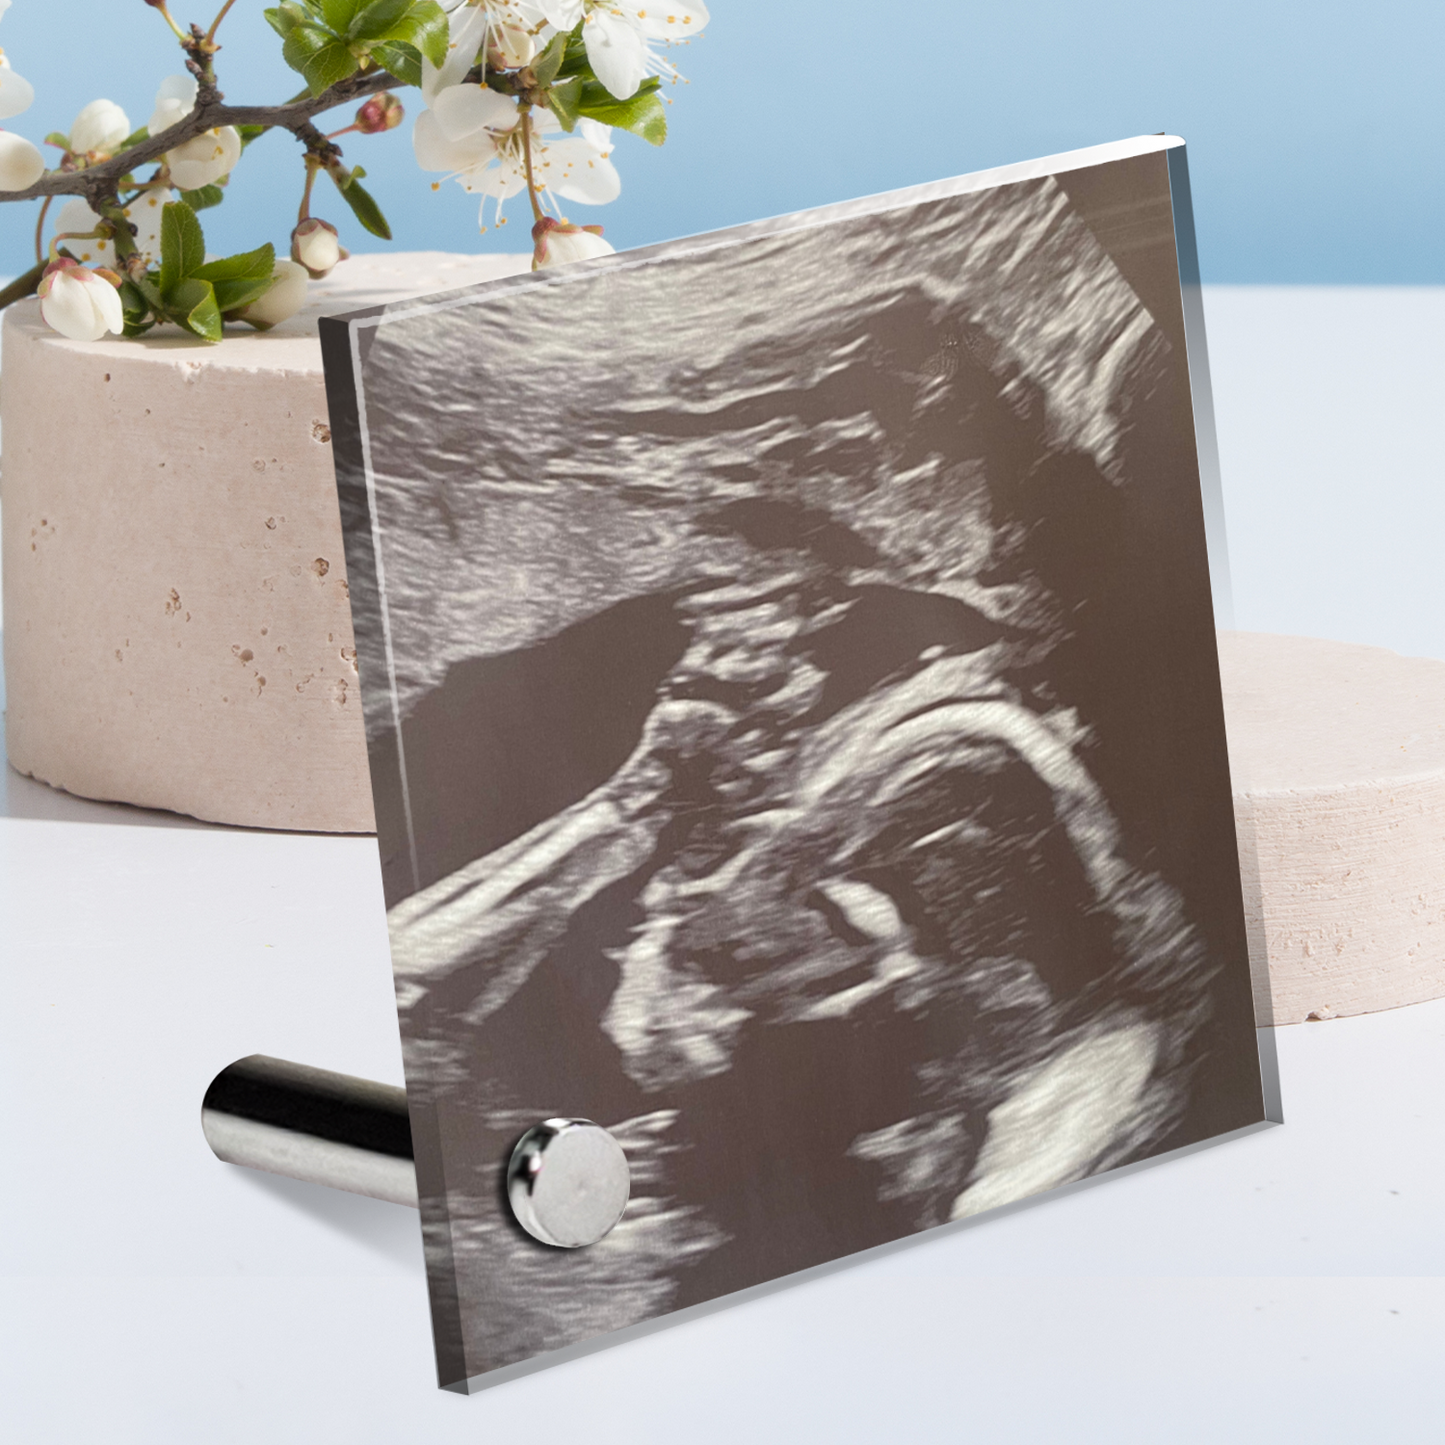 Personalized Baby Sonogram Lumenglass Plaque: Cherish Every Moment